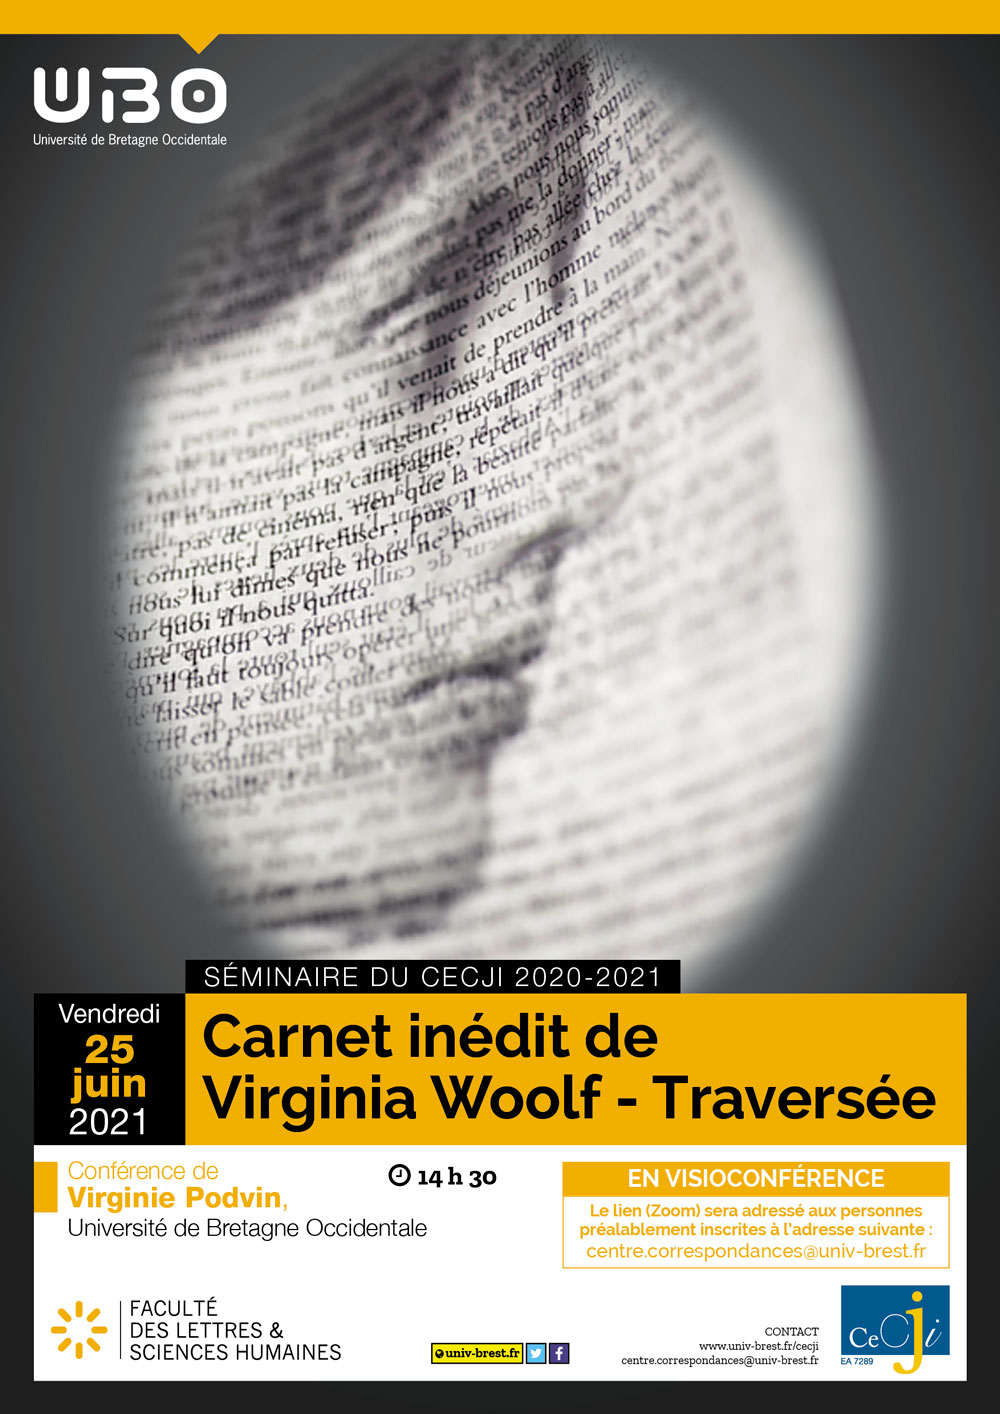 Carnet inédit de Virginia Woolf - Traversée